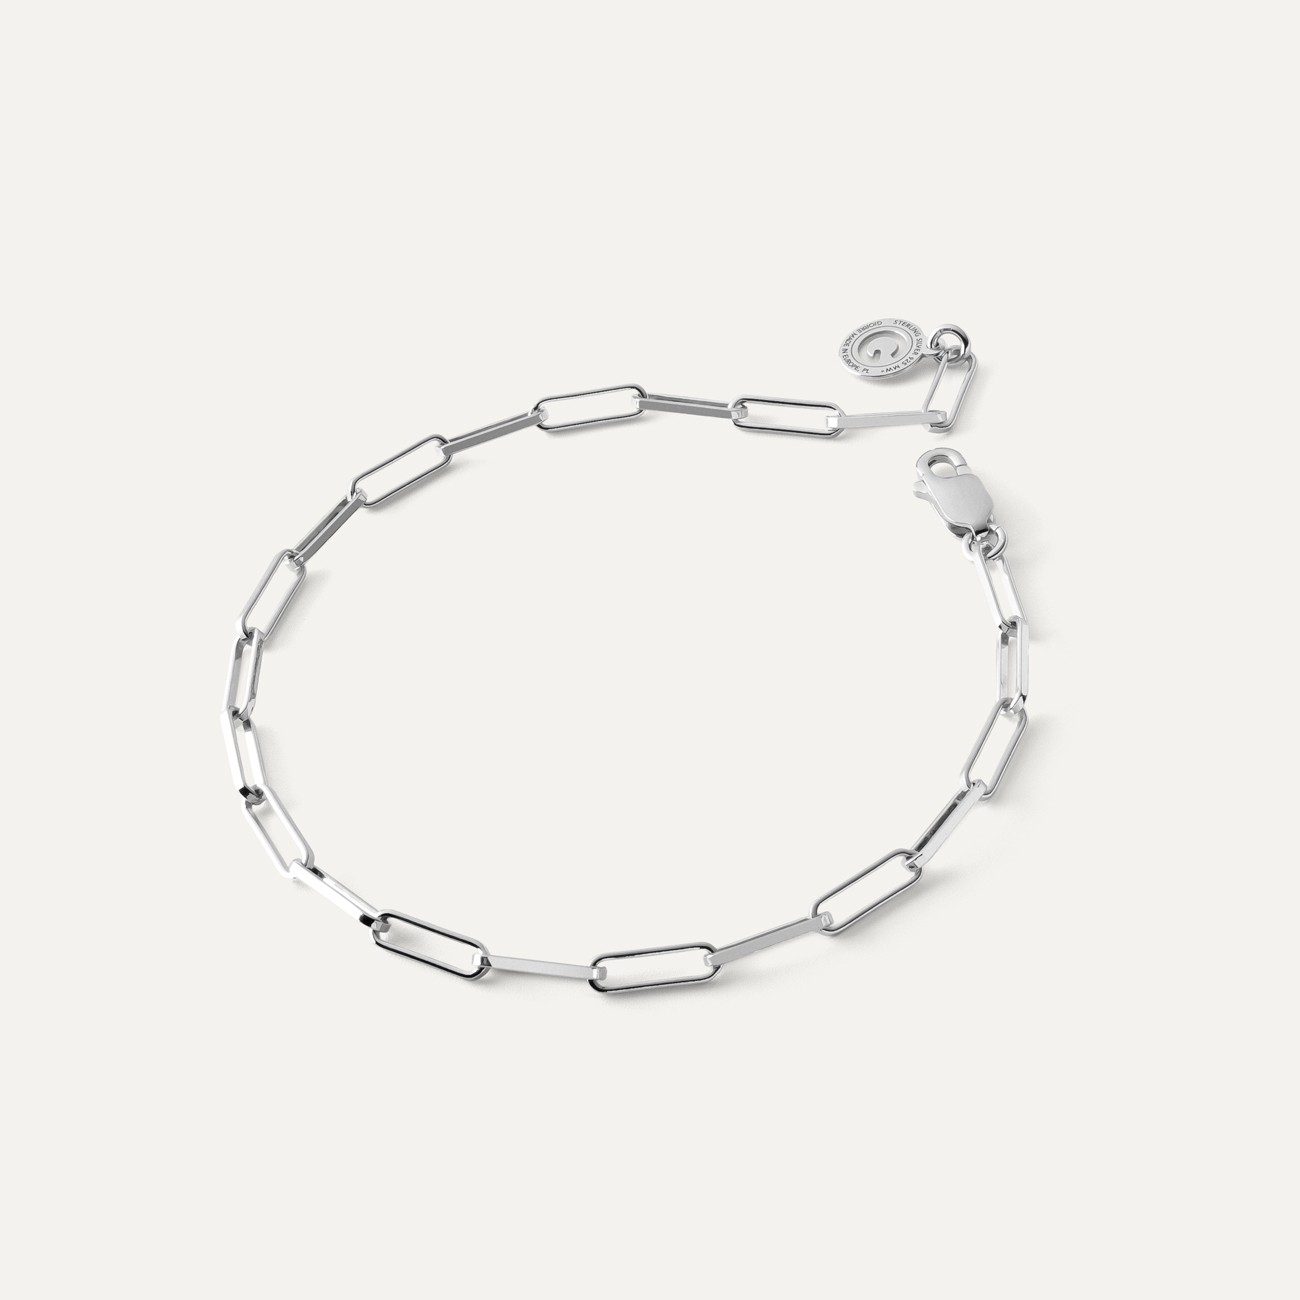 Silver bracelet charms base sterling silver 925